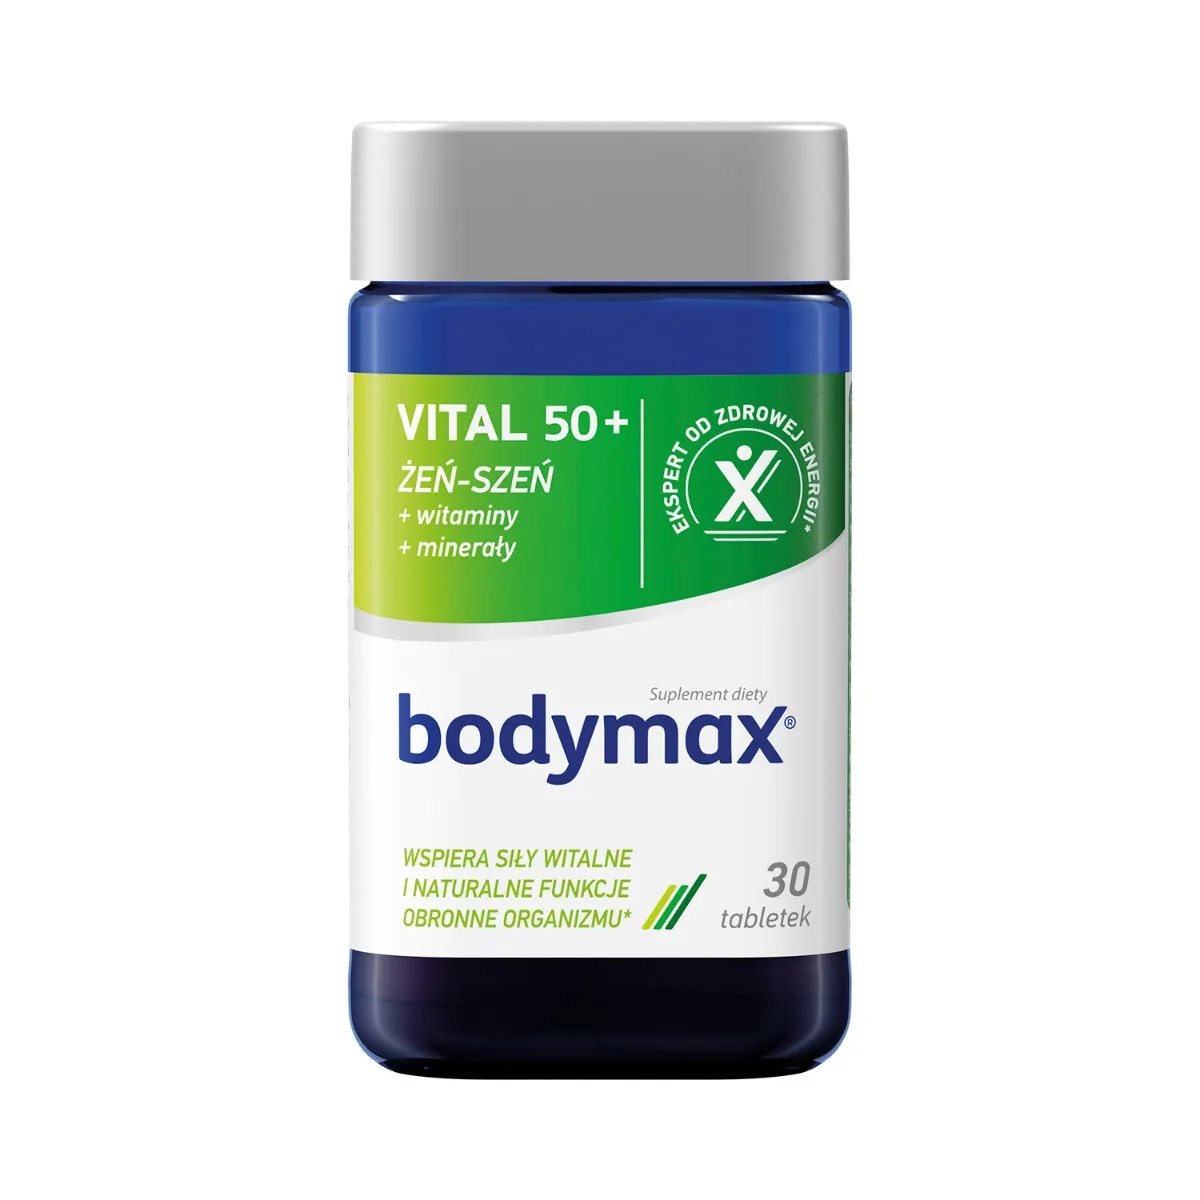 Bodymax Vital 50+, suplement diety, 30 tabletek